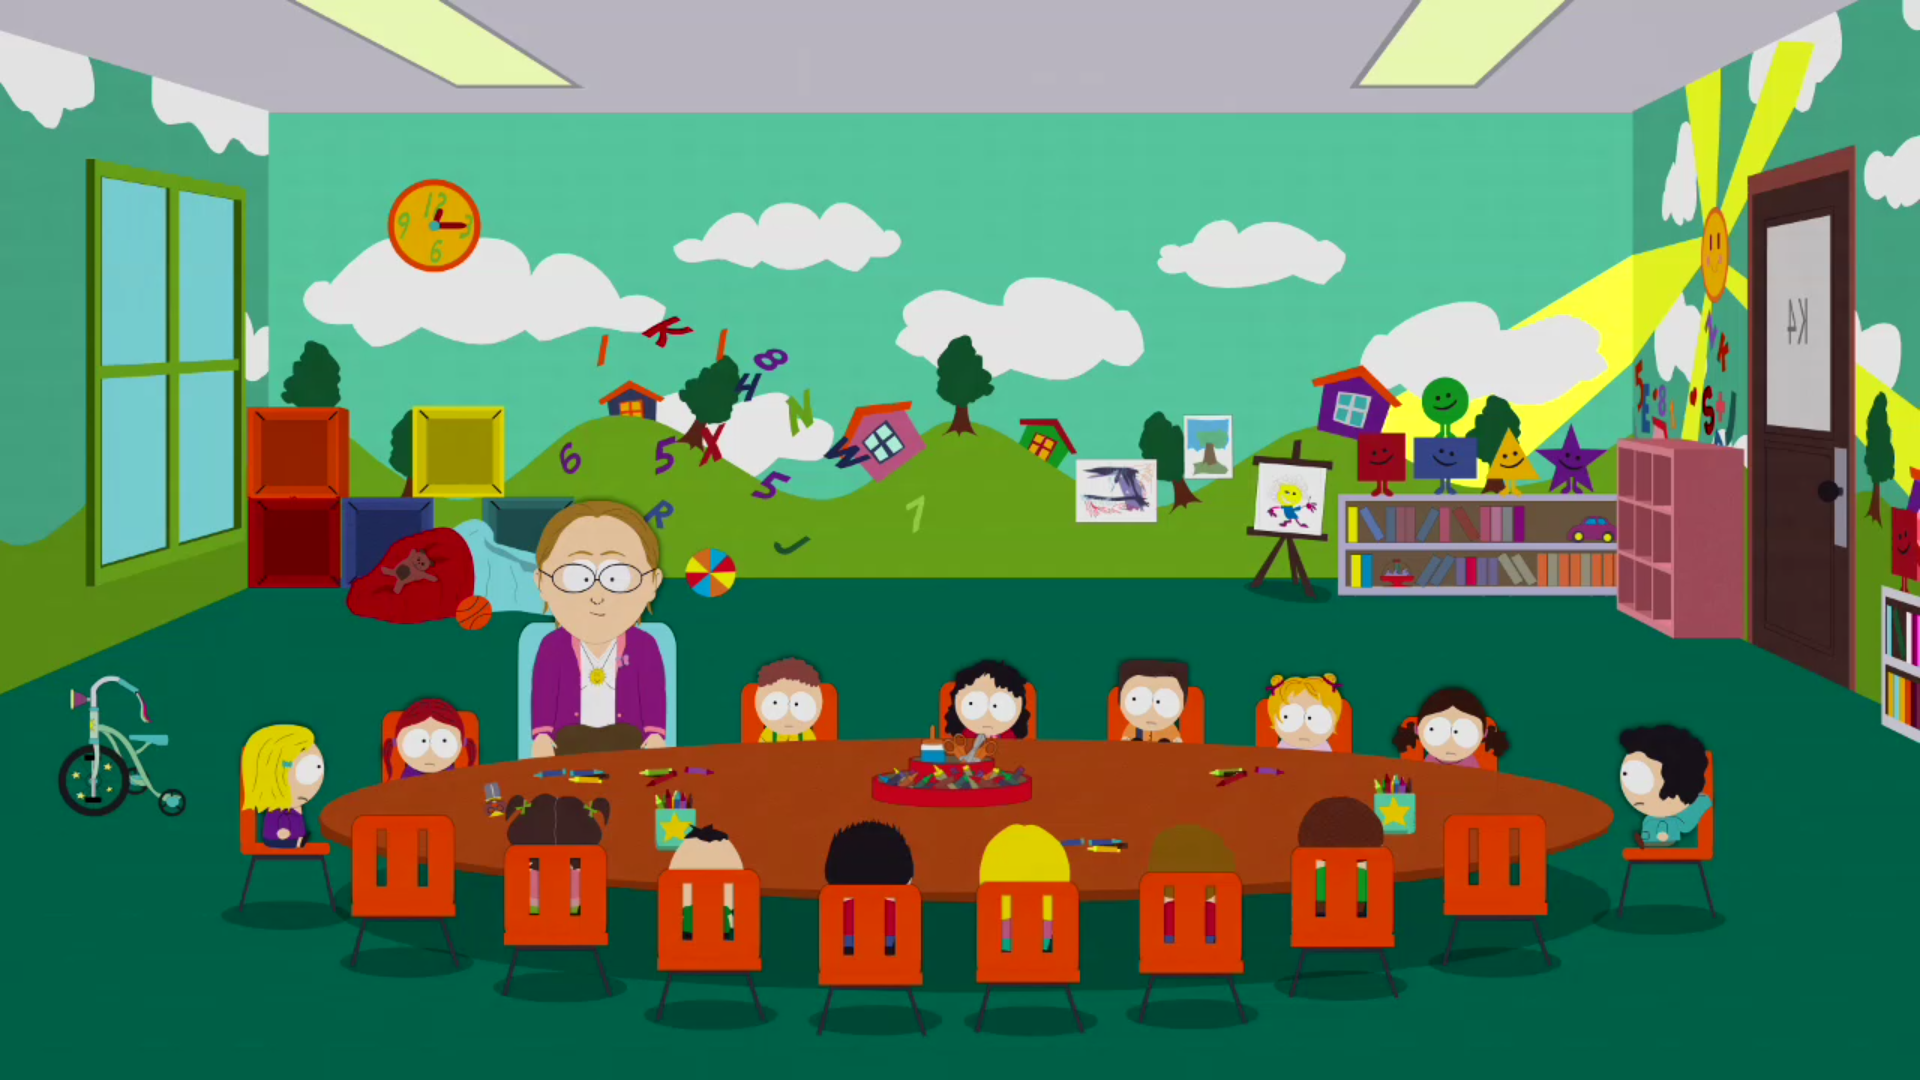 South Park School - Wikipedia